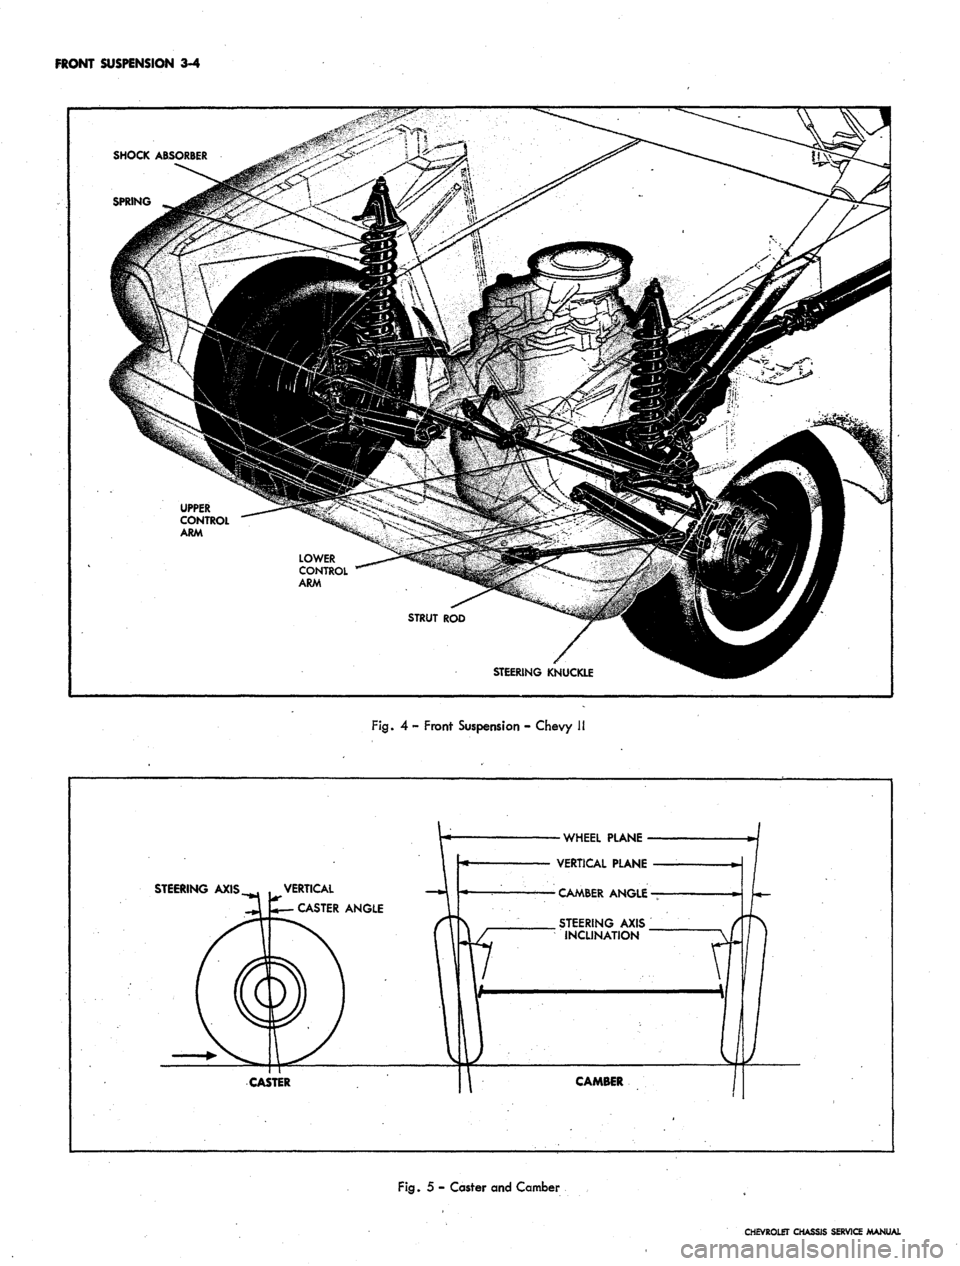 CHEVROLET CAMARO 1967 1.G Chassis Workshop Manual 
FRONT SUSPENSION 3-4

SHOCK ABSORBER

5PRING

UPPER

CONTROL

ARM

LOWER

CONTROL

ARM

STRUT ROD

STEERING KNUCKLE

Fig.
 4 - Front Suspension - Chevy

STEERING AXIS 
VERTICAL

CASTER ANGLE

CASTER 